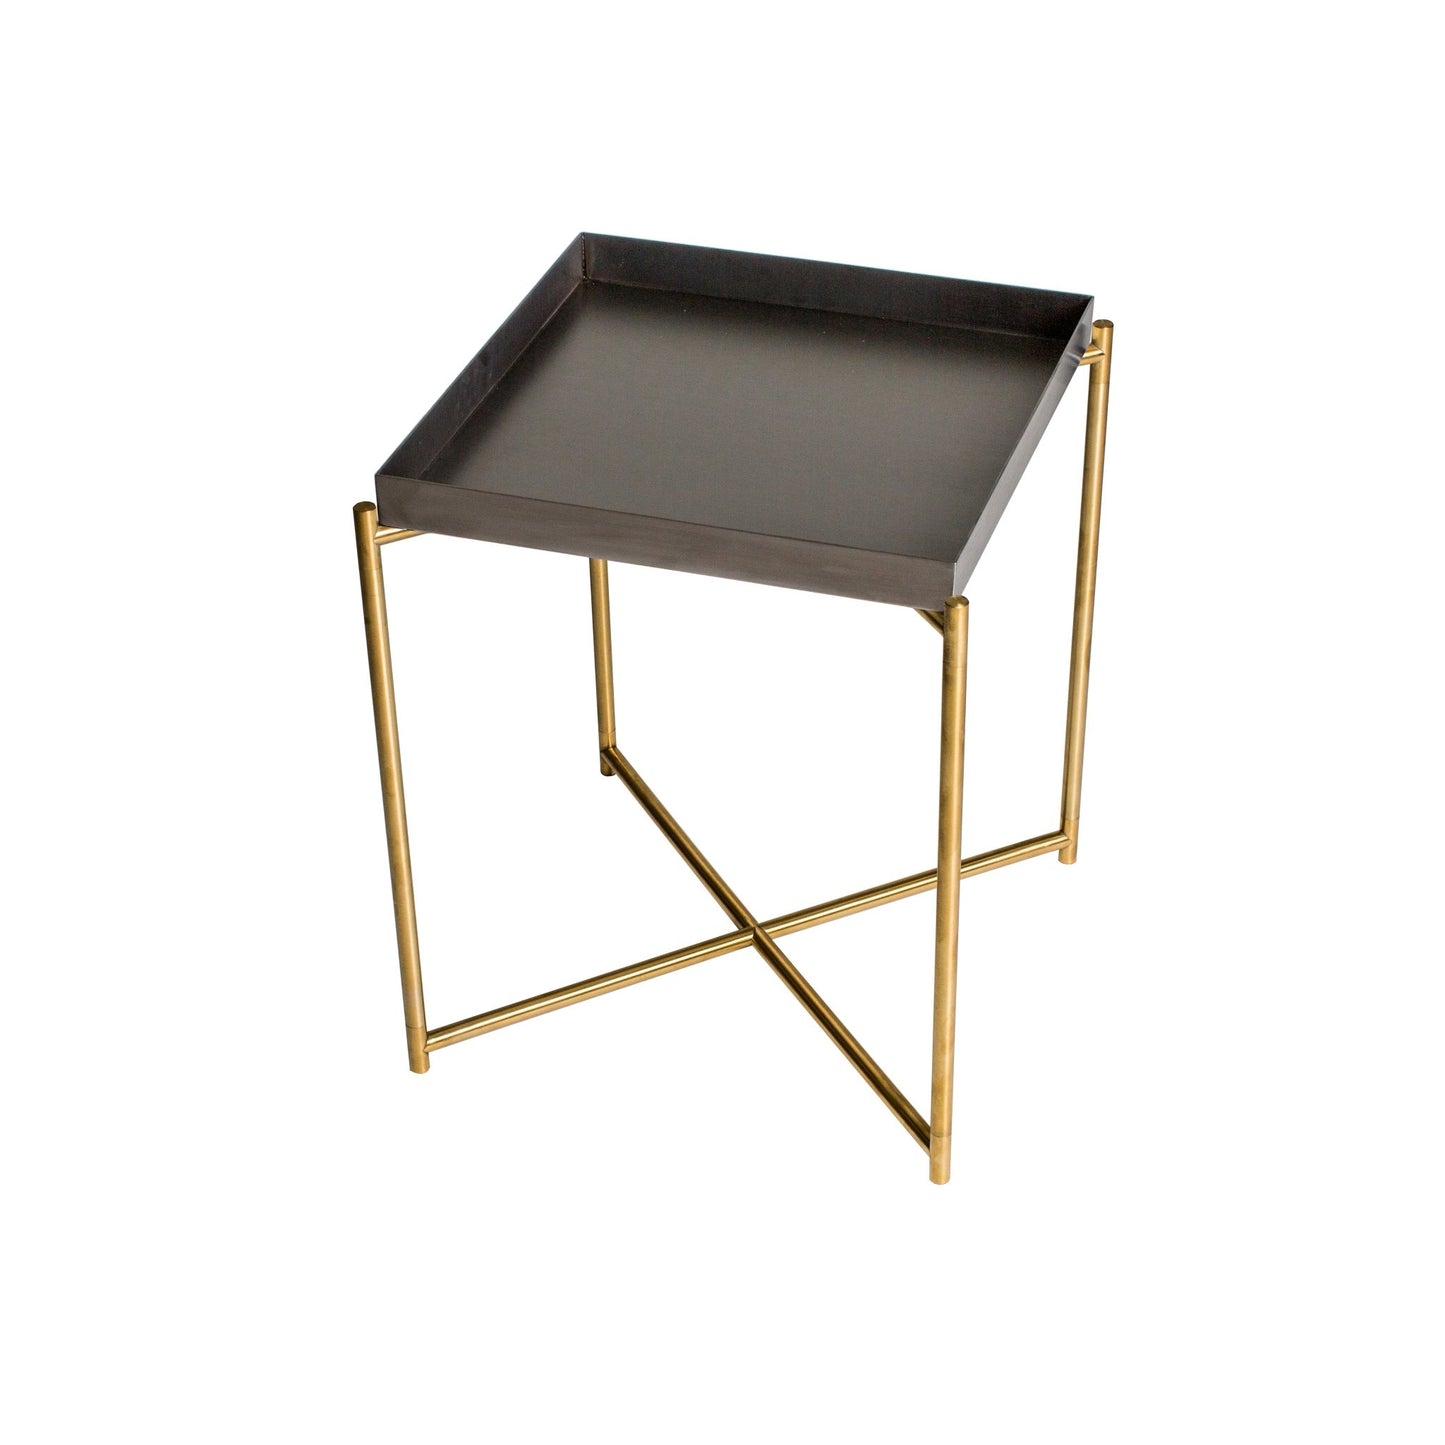 Iris Square Tray Top Side Table - Gun Metal Tray & Brass Frame